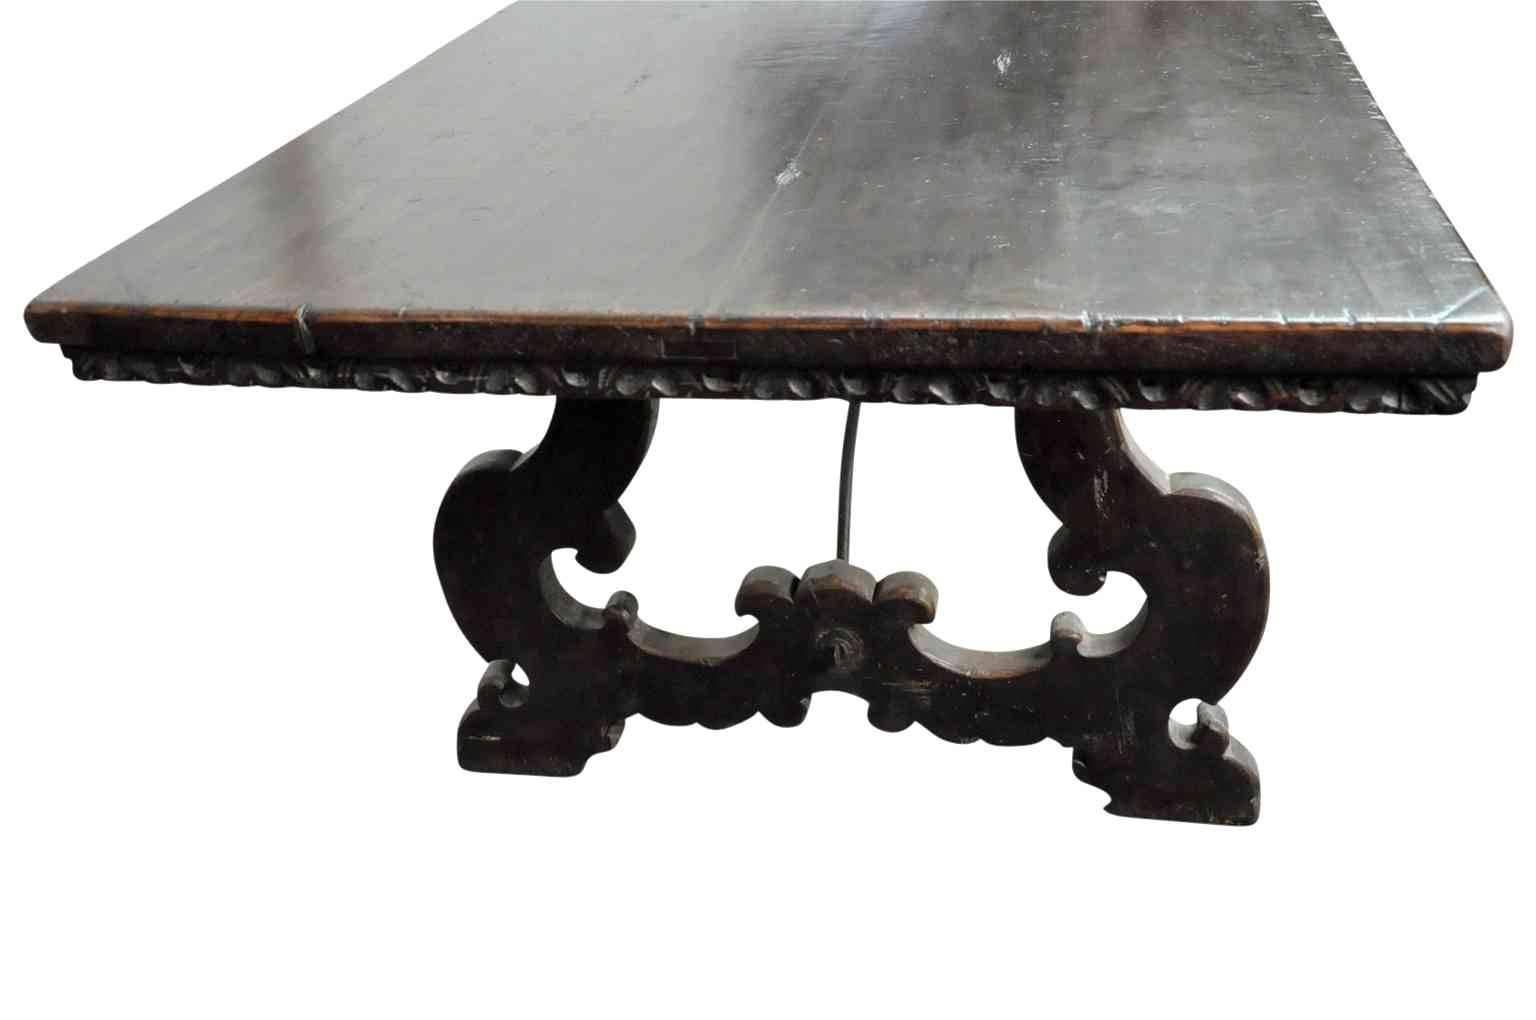 Contemporary Italian 17th Century Style Farm Table or Trestle Table